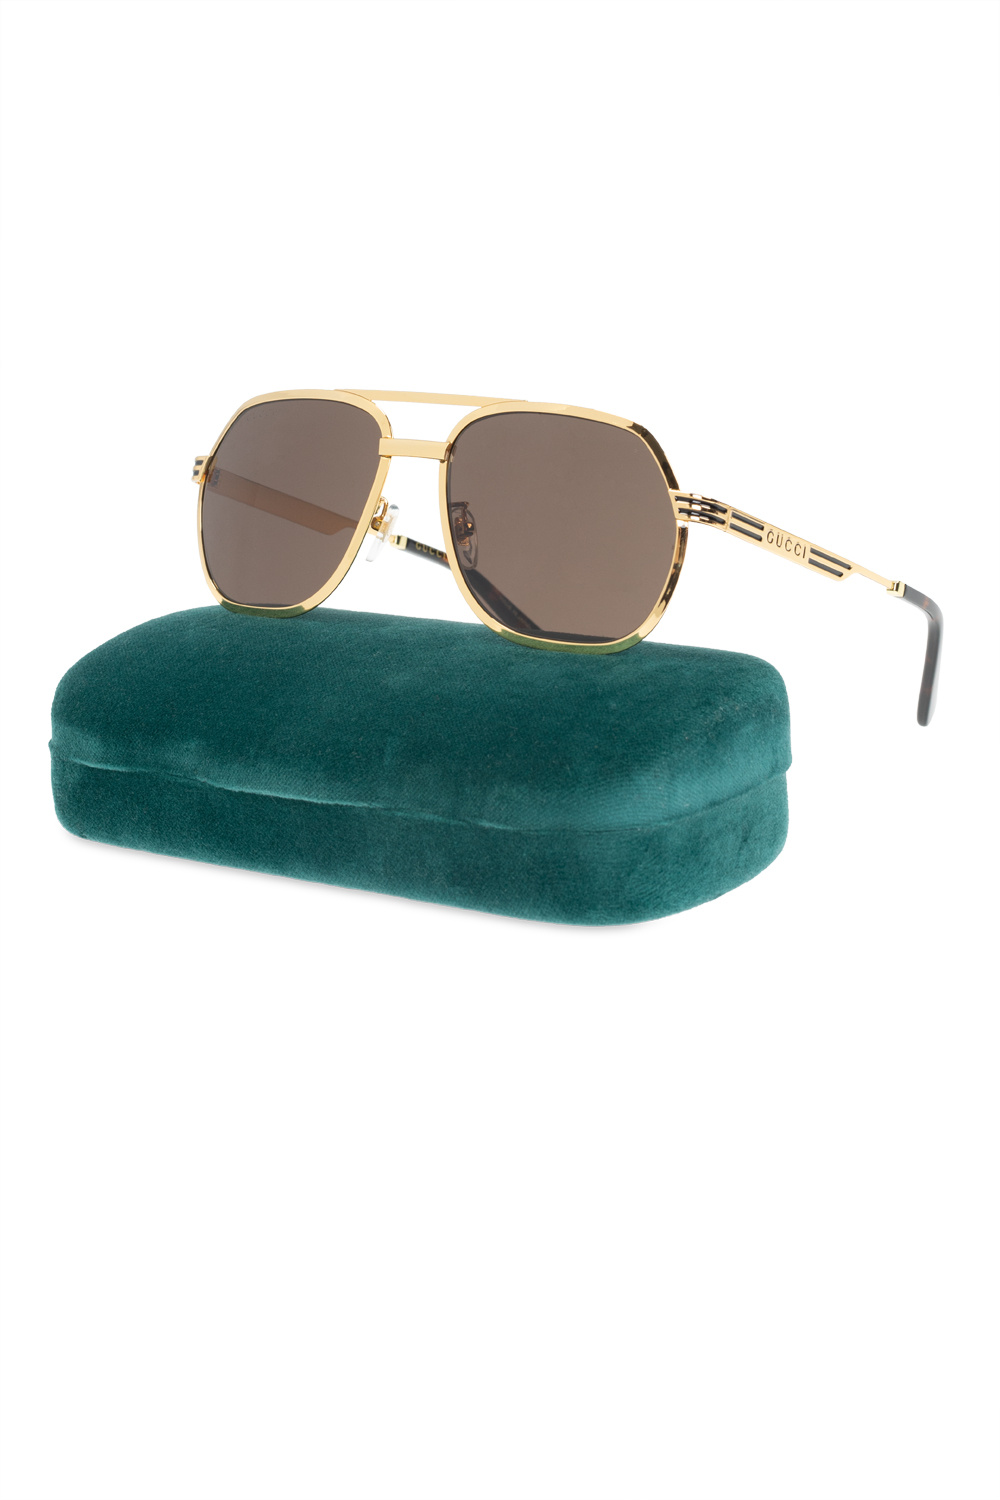 Gucci veneta sunglasses guess gu7640 5733f gold other gradient brown